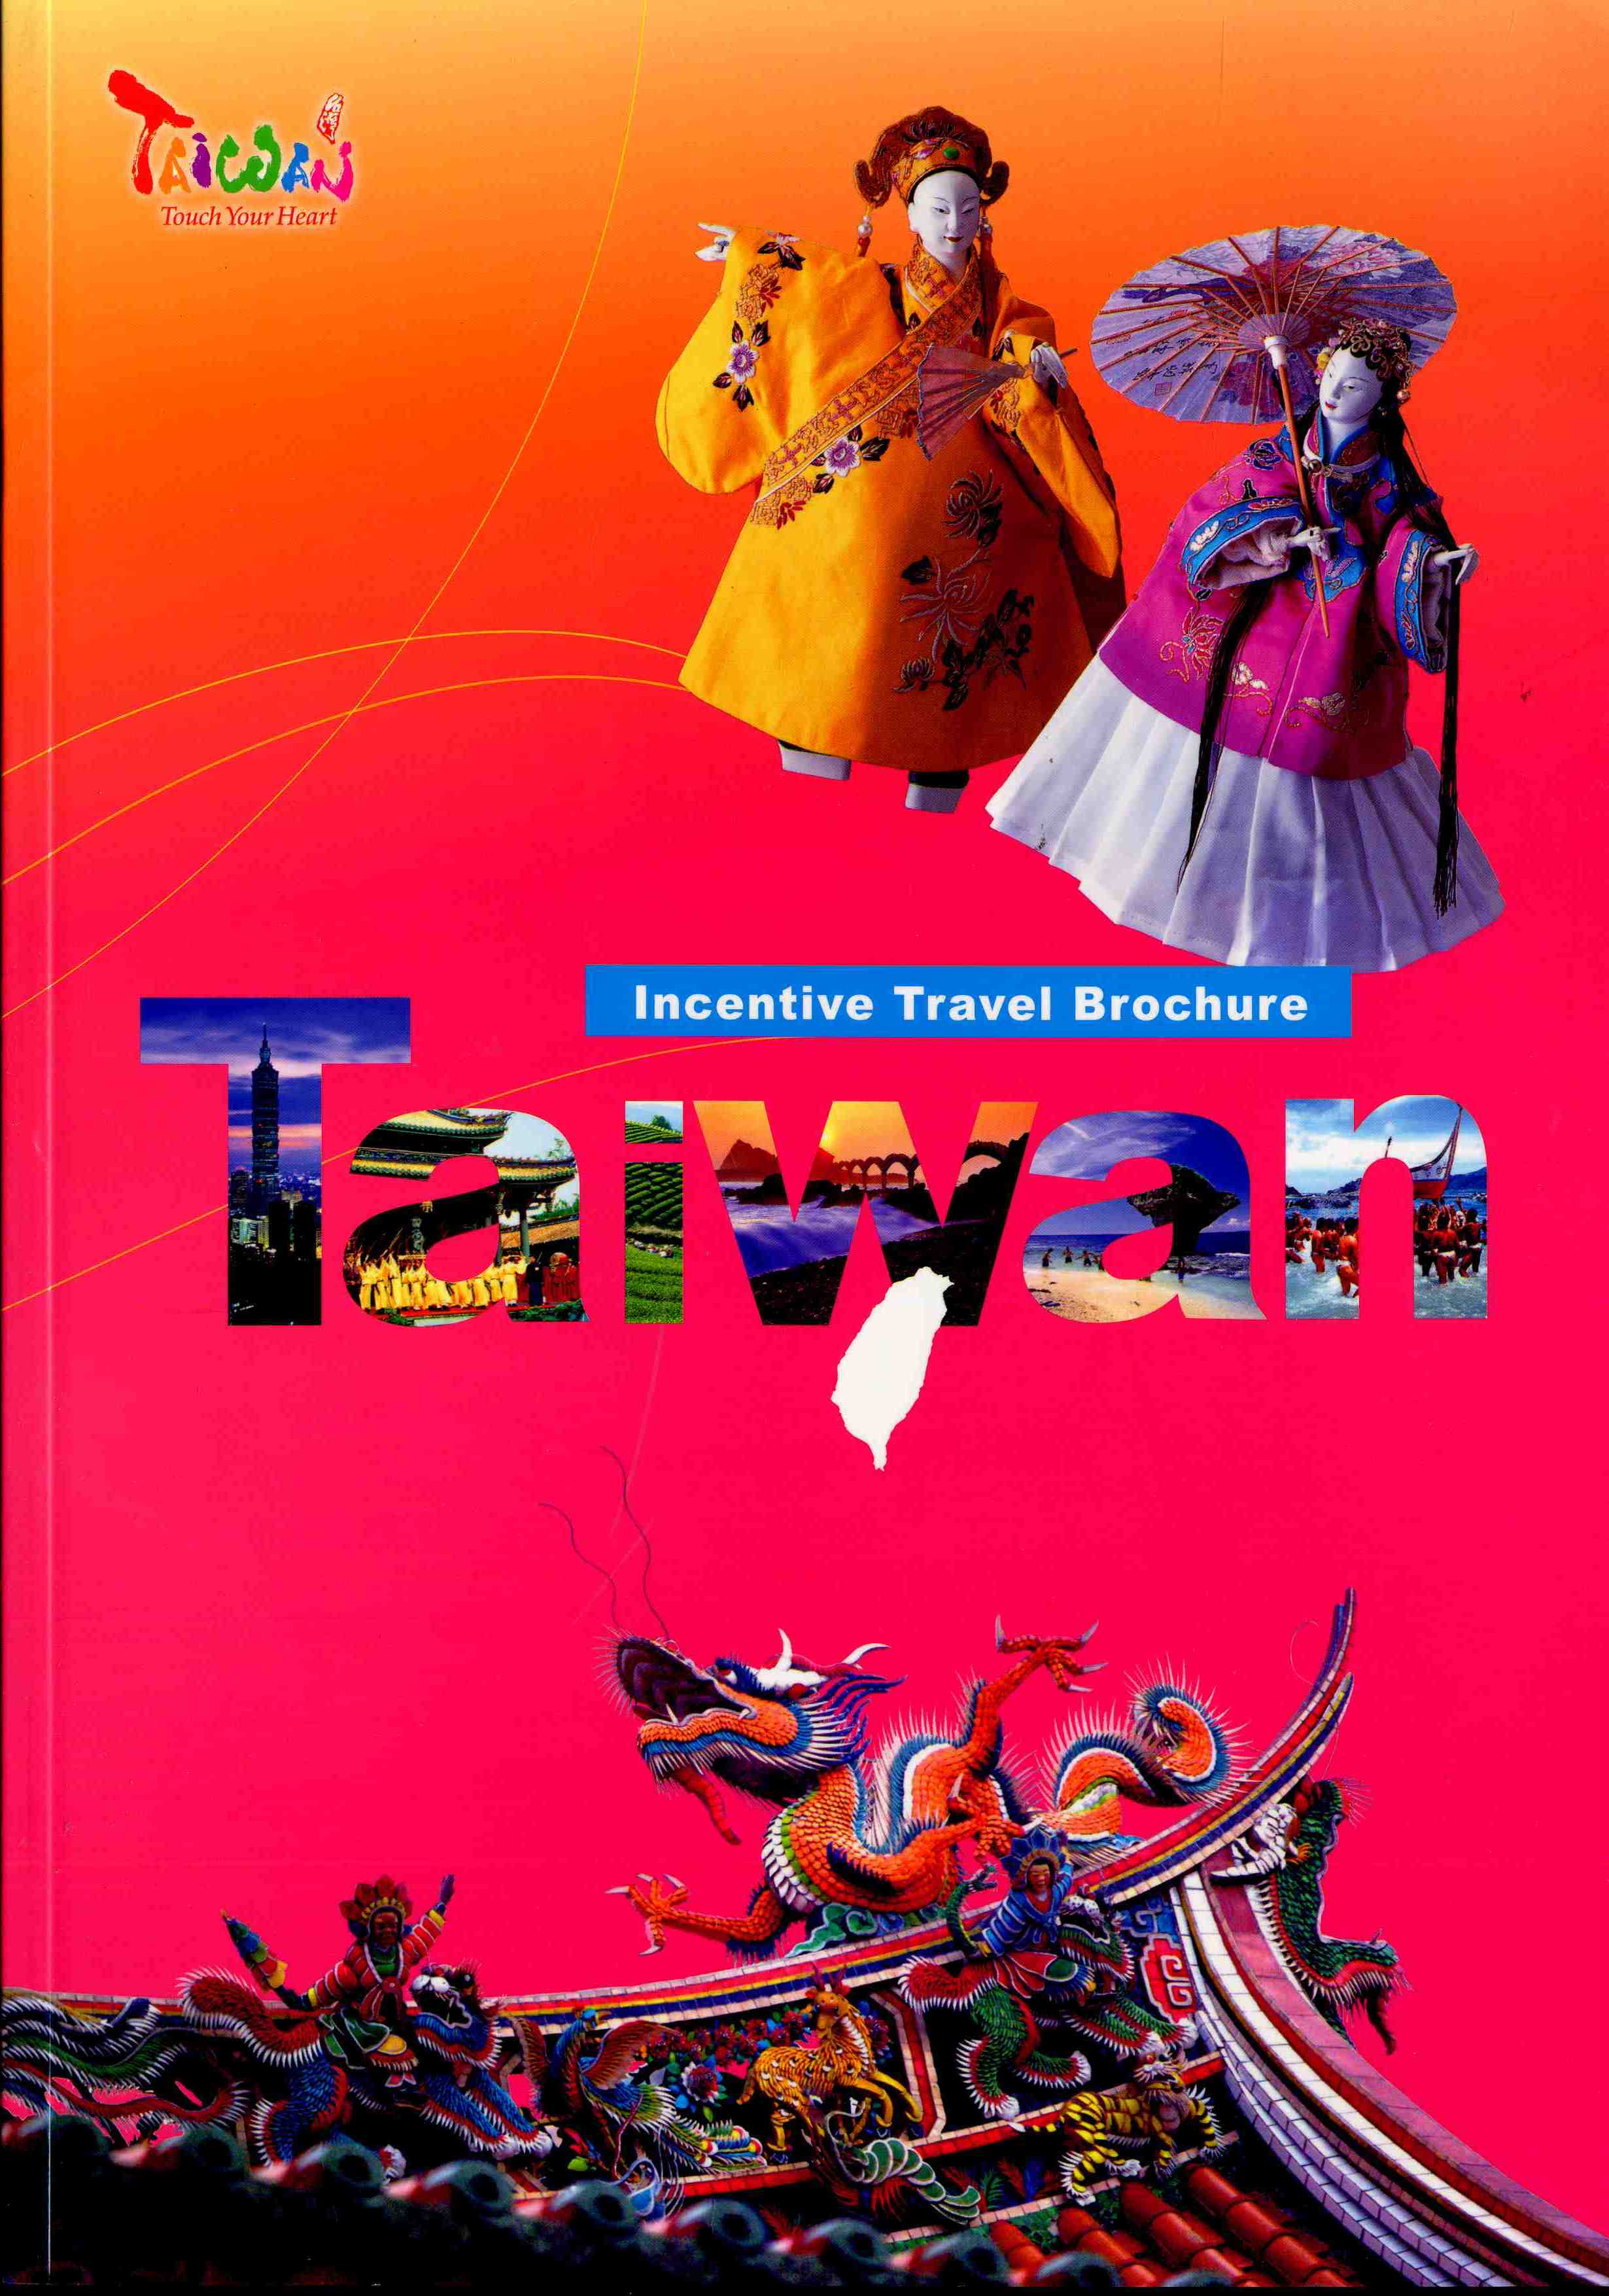 Taiwan Incentive Travel Brochure GPI政府出版品資訊網